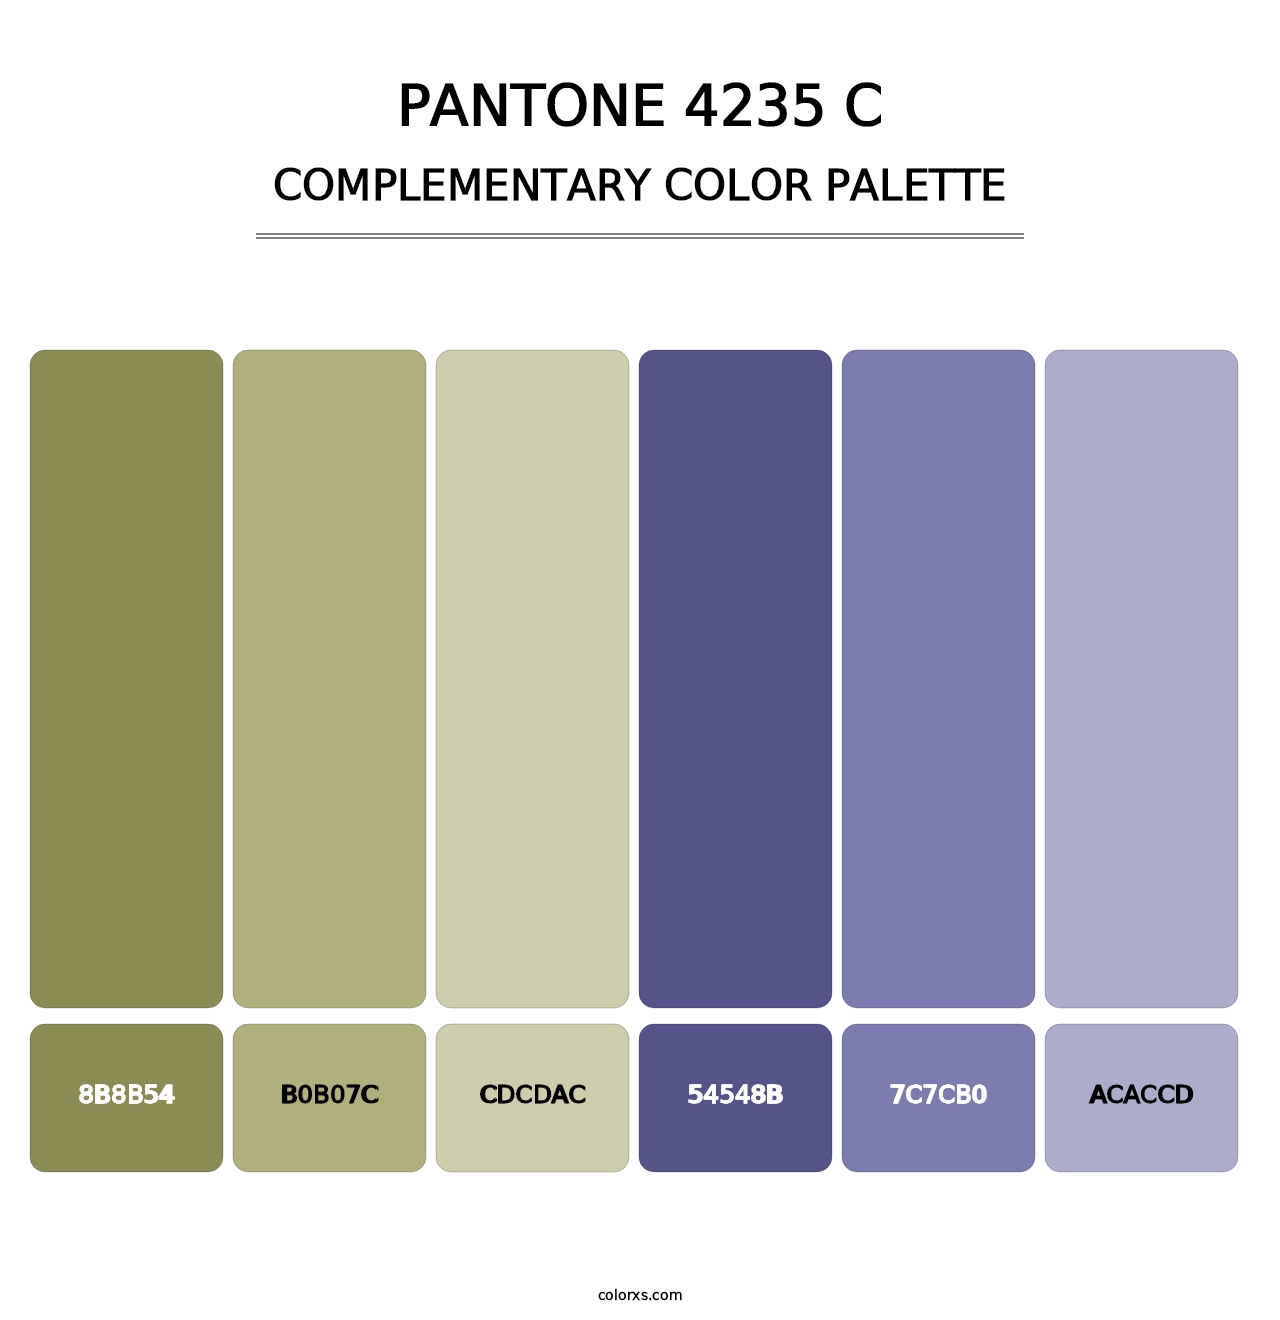 PANTONE 4235 C - Complementary Color Palette